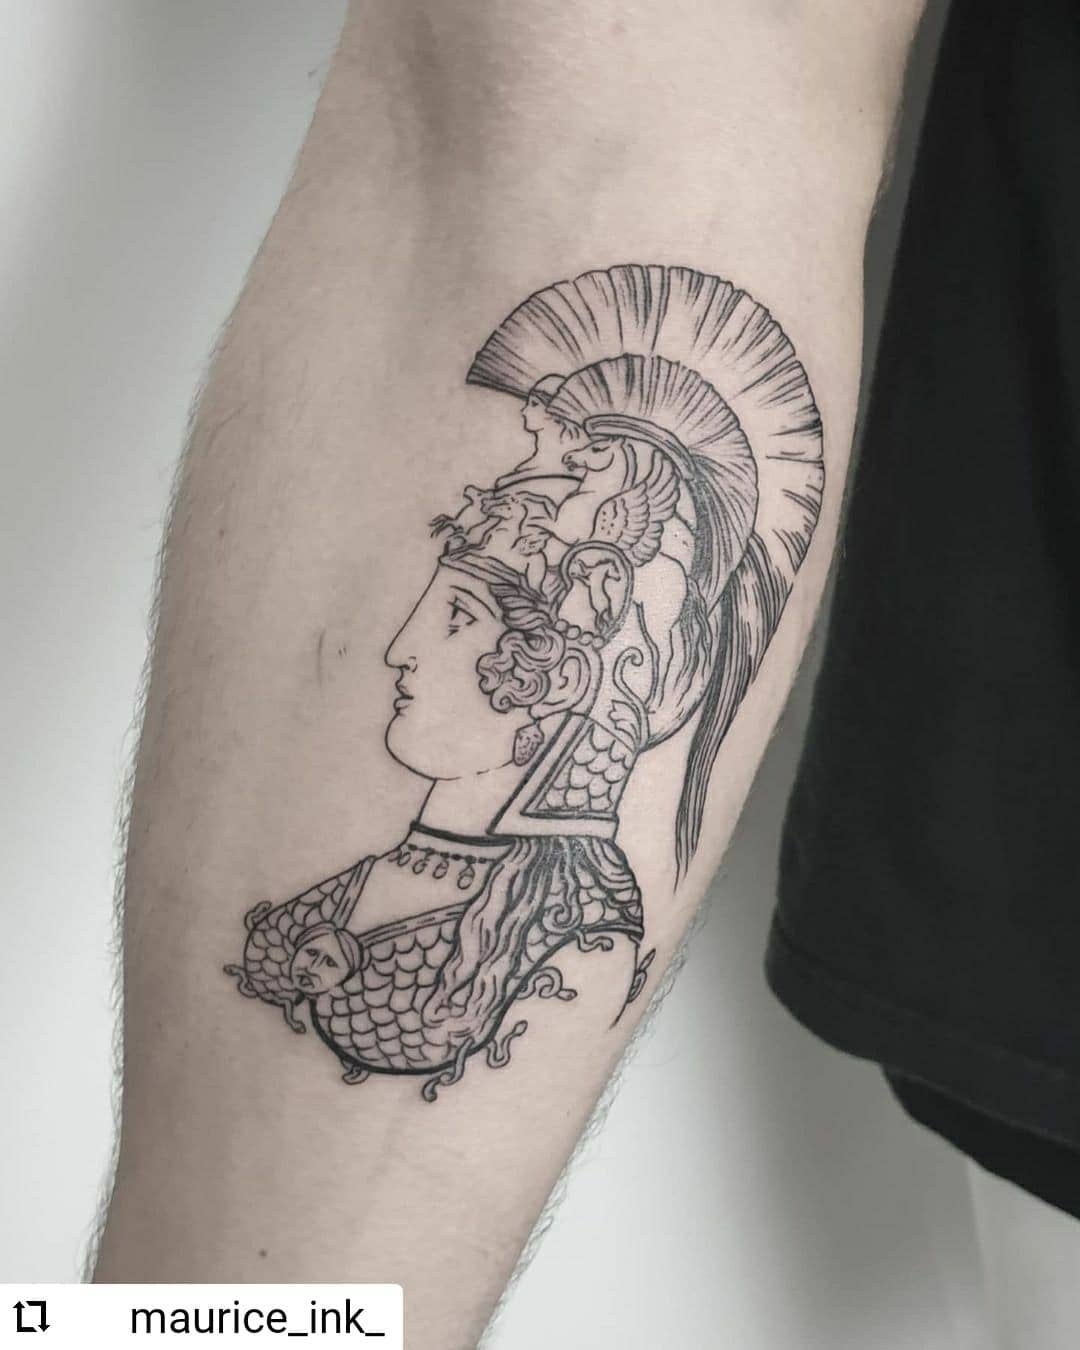 Neu von @maurice_ink_
...
Small Athena throwback
.
#tattoo #tattoos #minimaltatt